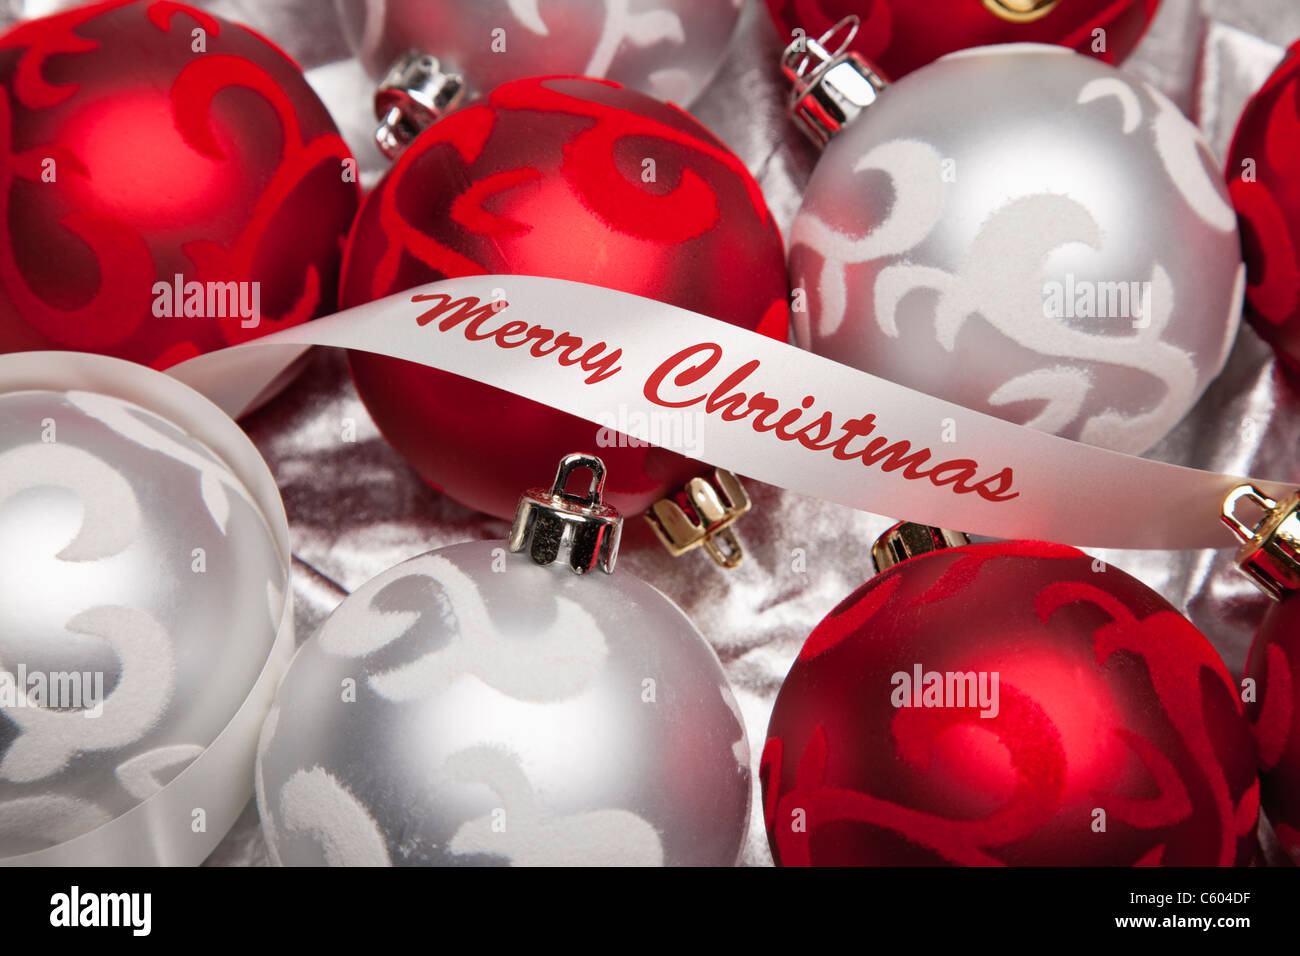 USA, Illinois, Metamora, Merry Christmas ribbon and ornaments Stock Photo